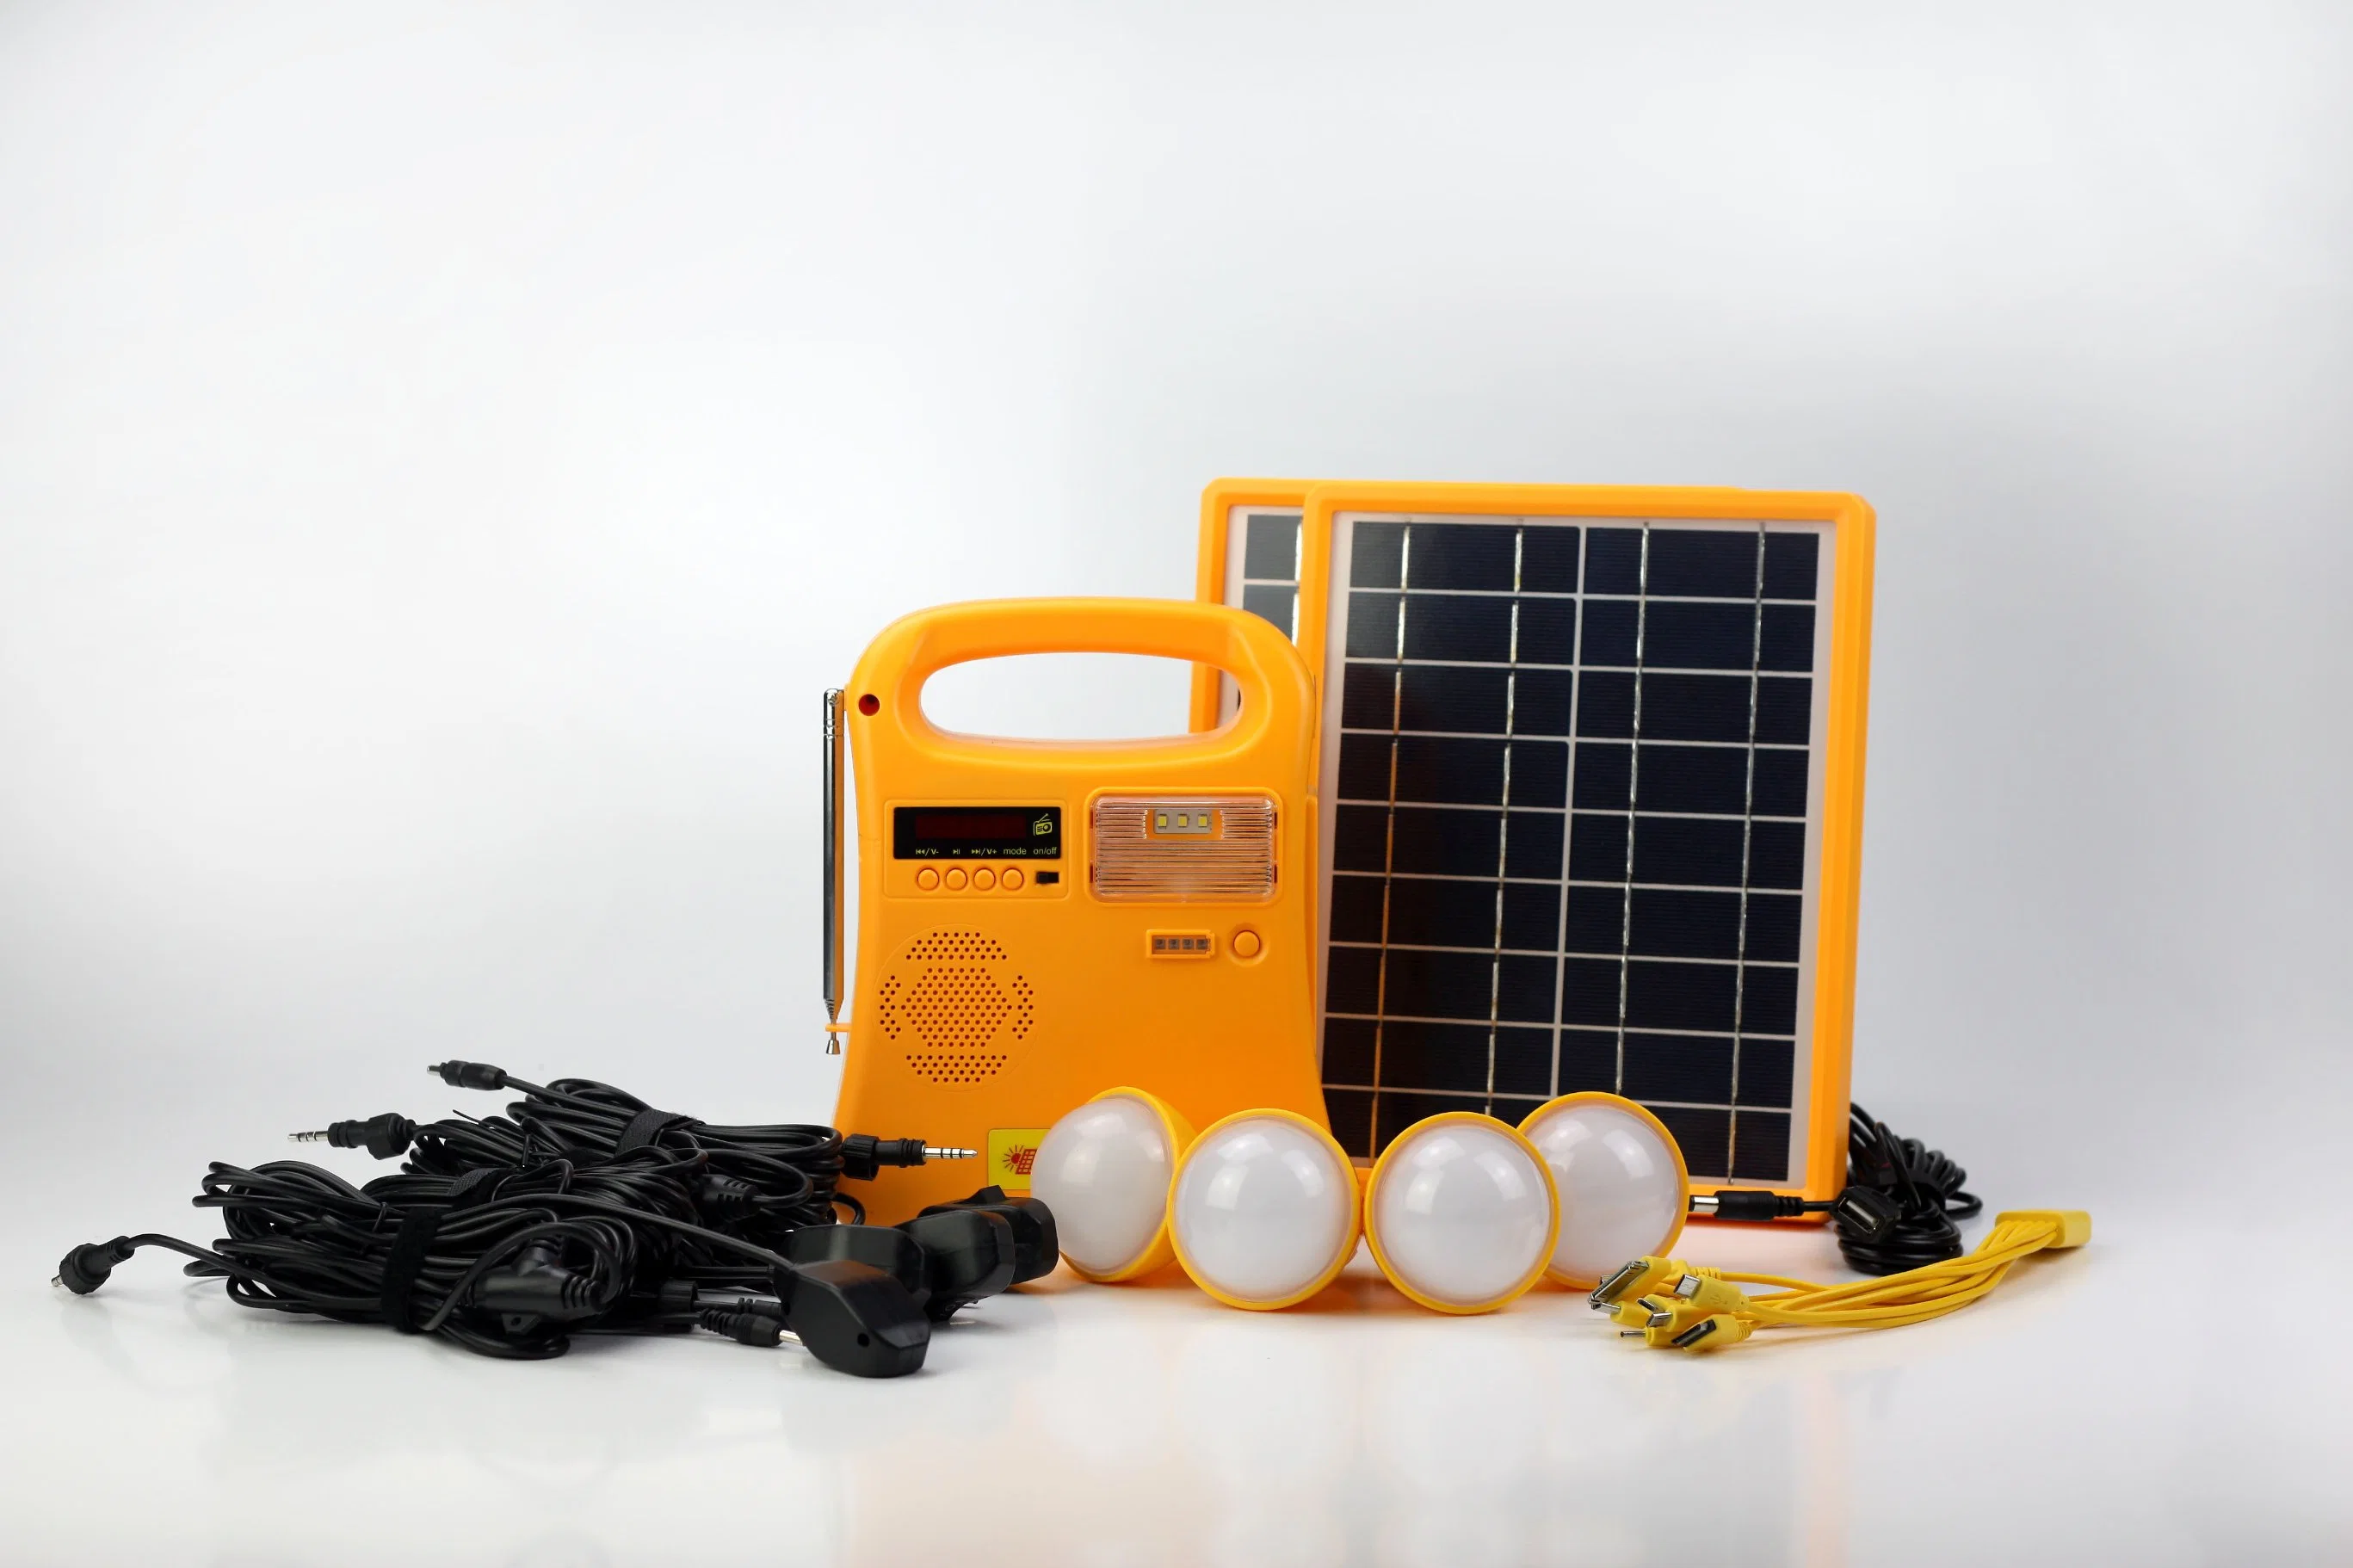 Solar Panel LED Lighting Lamp Solar Power New Energy Solar Kit with FM Radio/MP3 Hotsale